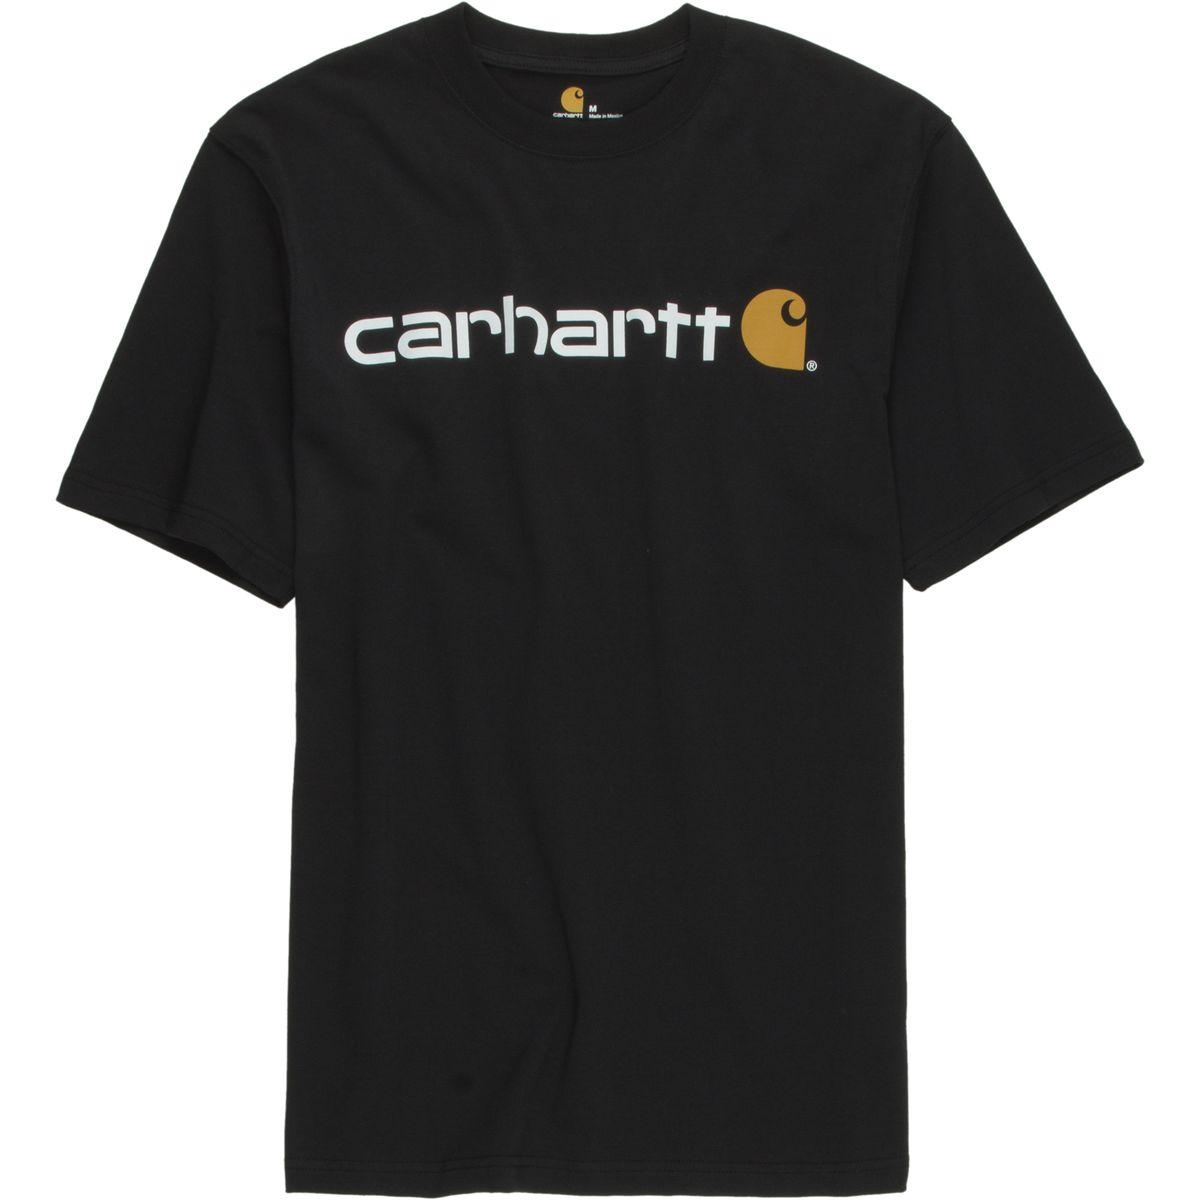 Carhartt Cotton Signature Logo Short-sleeve T-shirt in Black for Men - Lyst